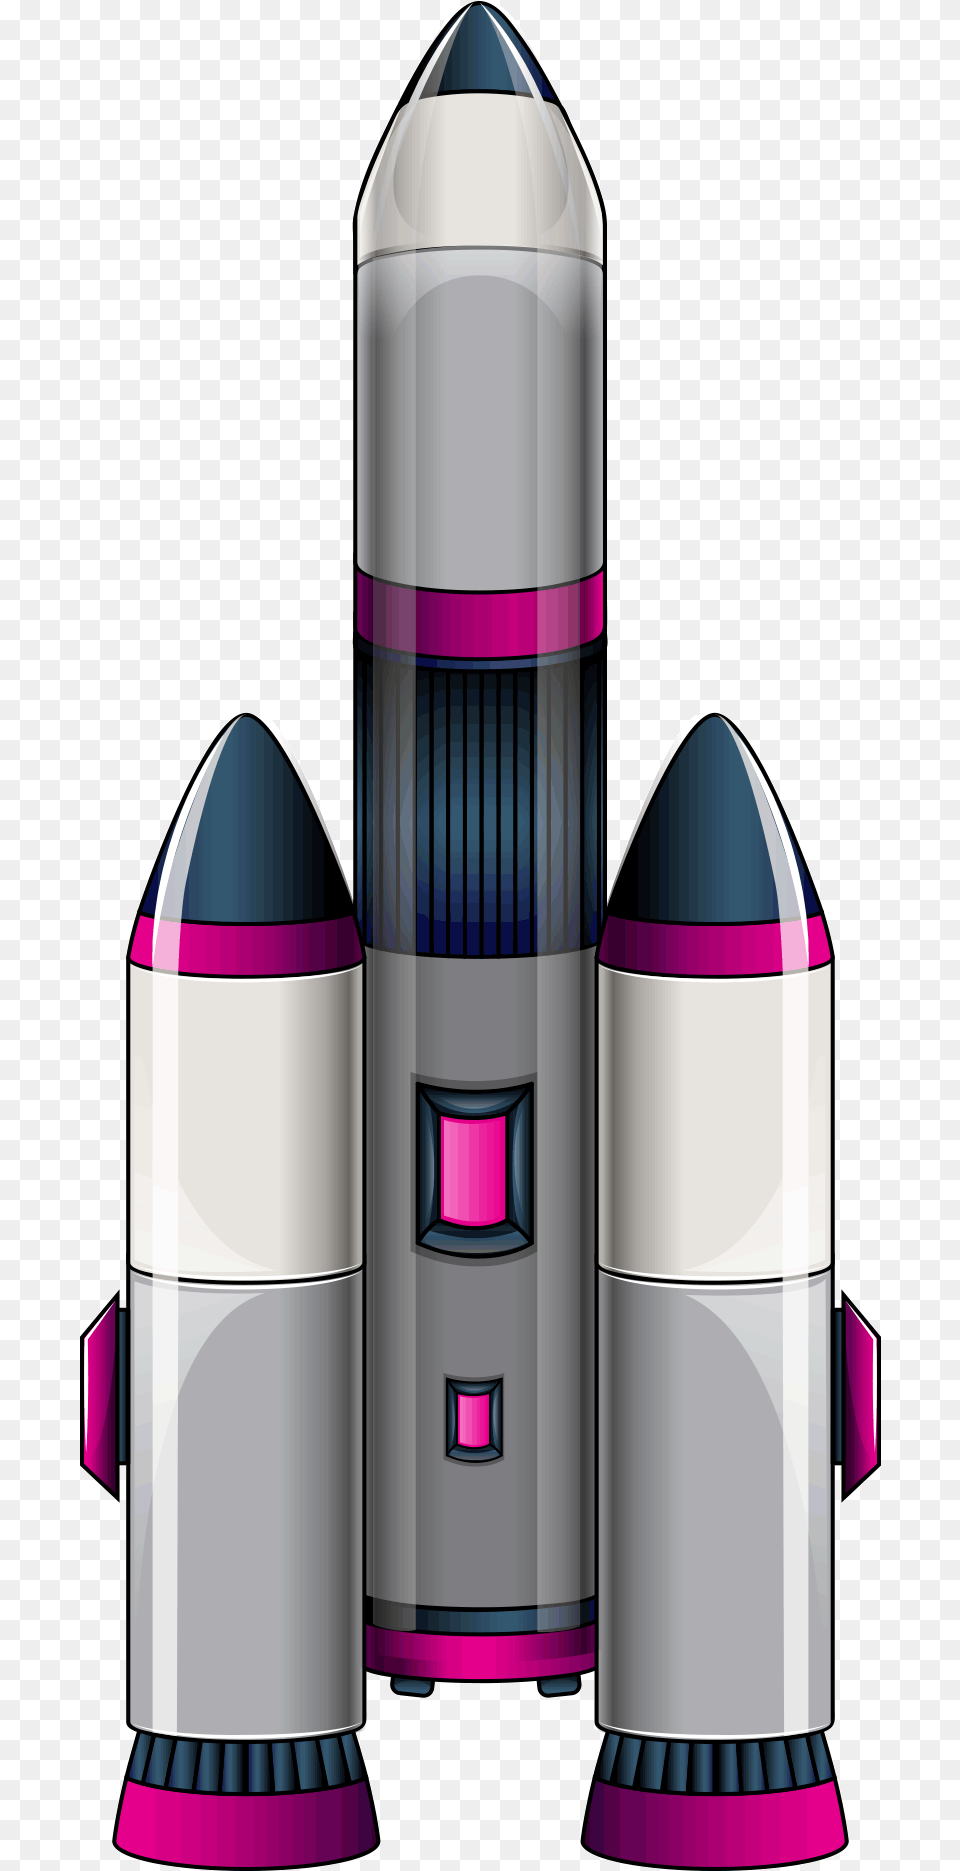 Space Rocket Hd Download Space Rocket Images Hd, Weapon, Ammunition, Bullet Png Image